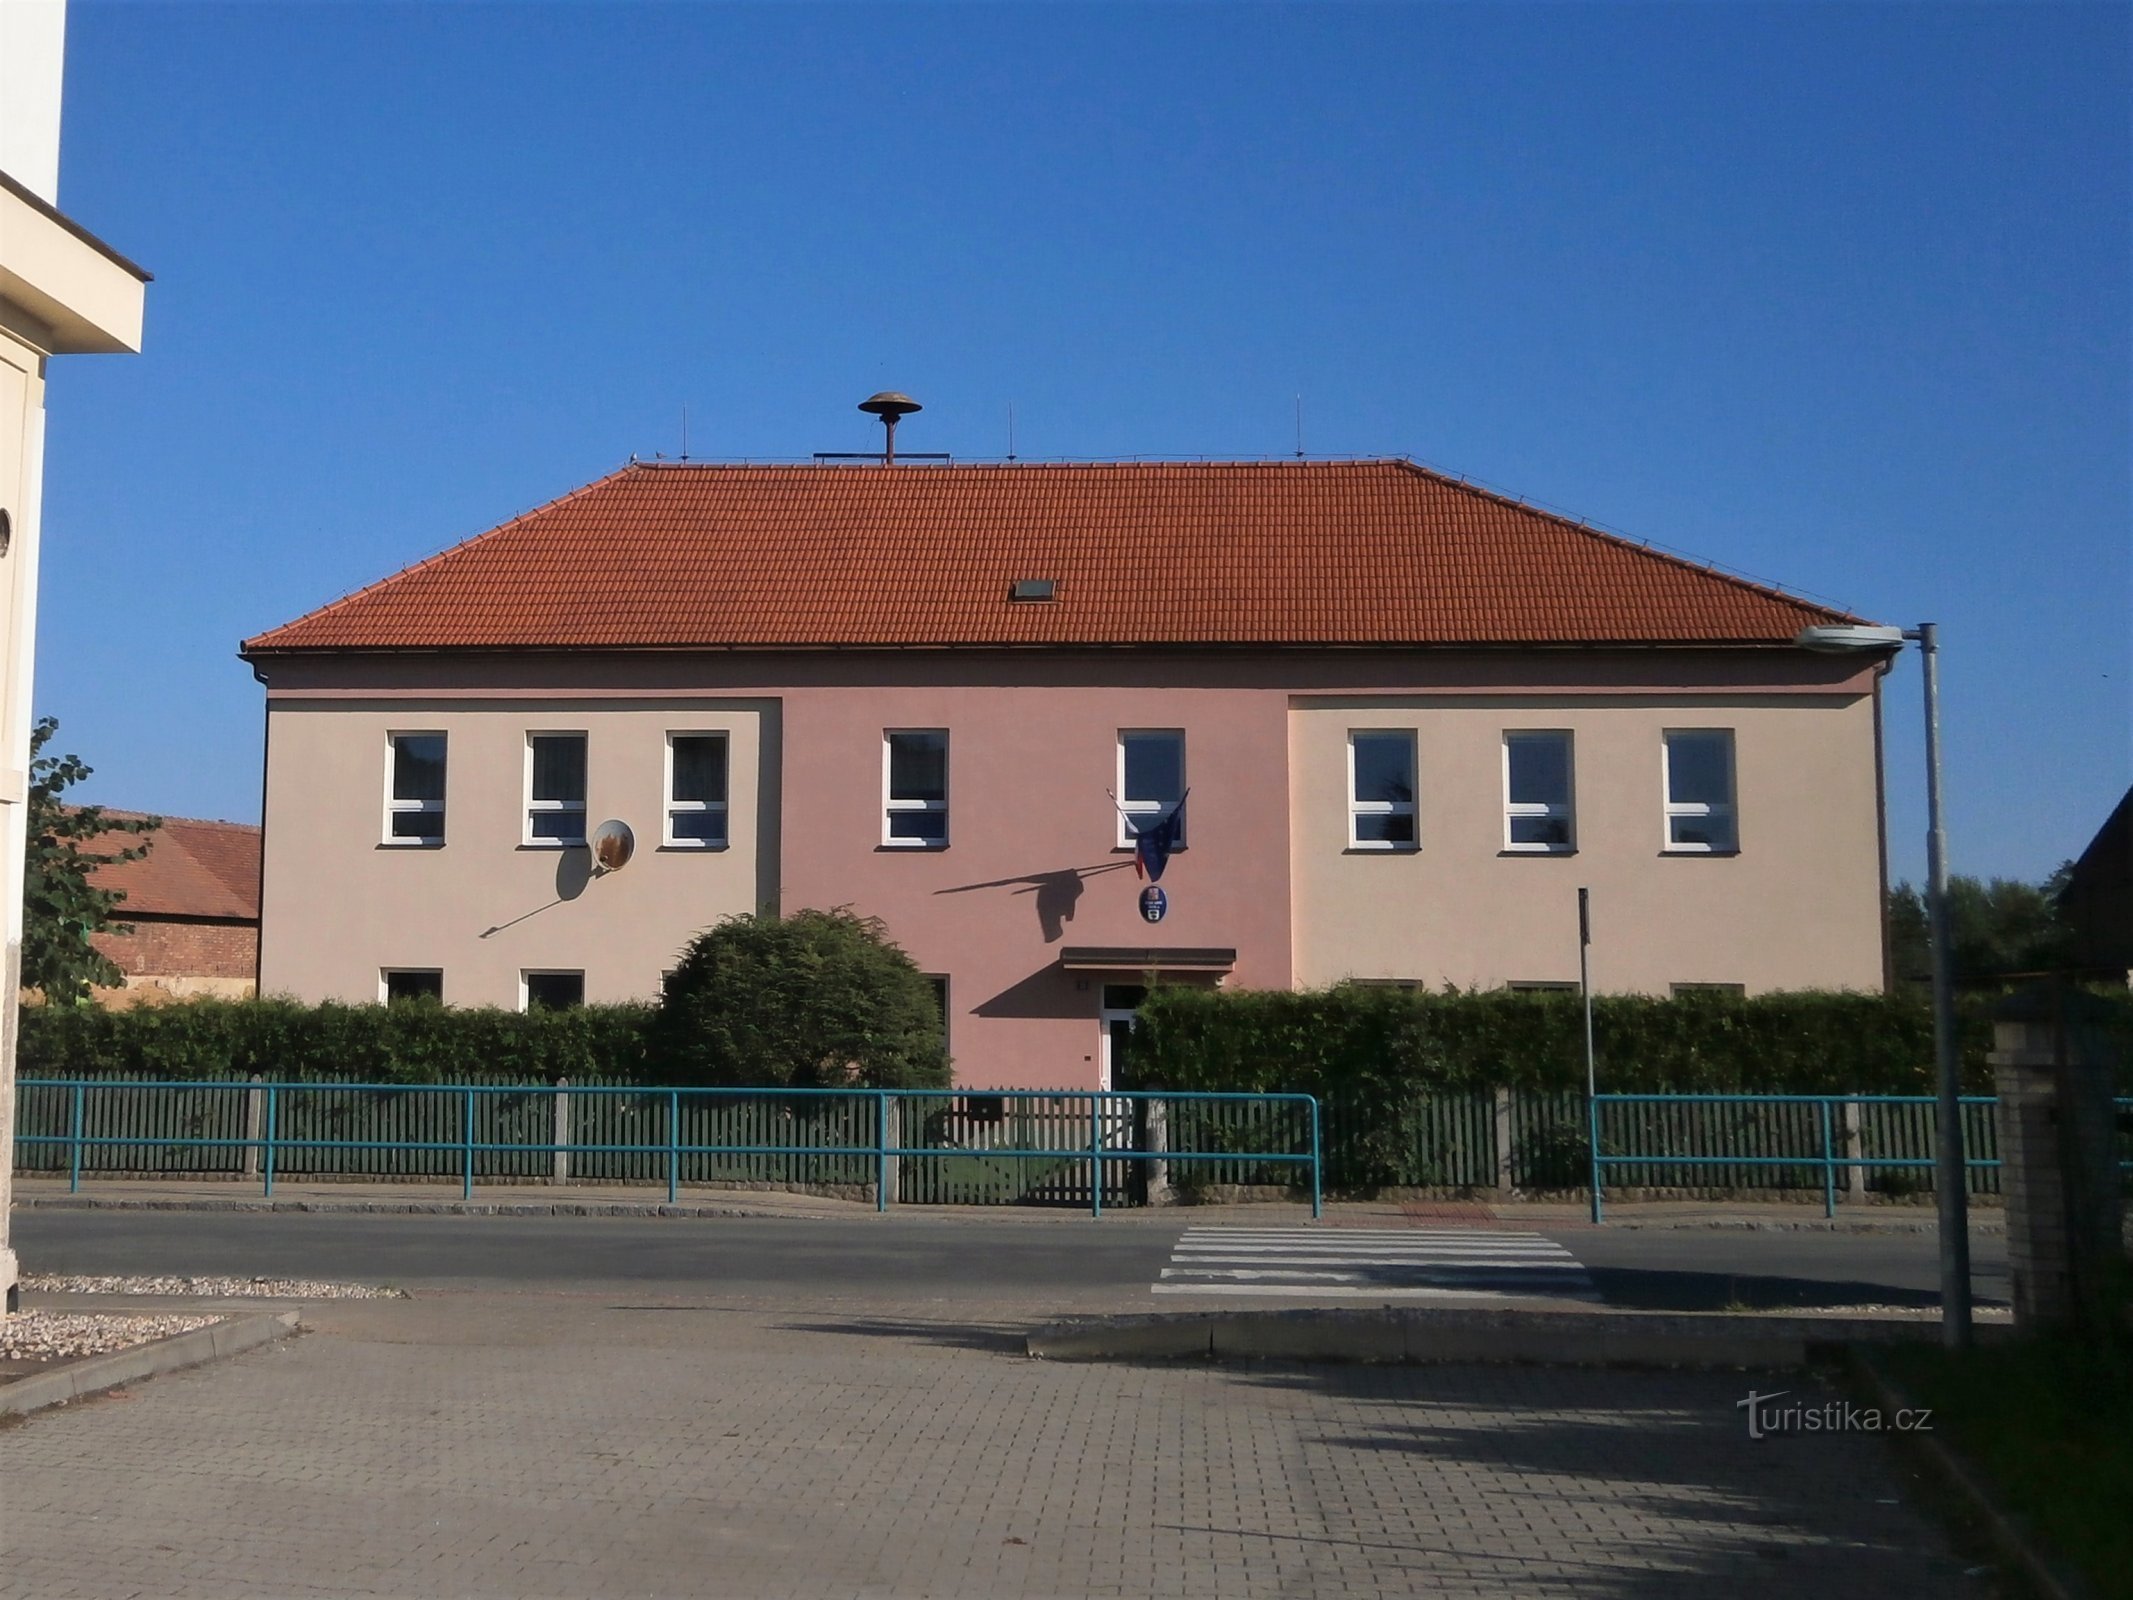 Școală (Staré Ždánice, 30.7.2017)